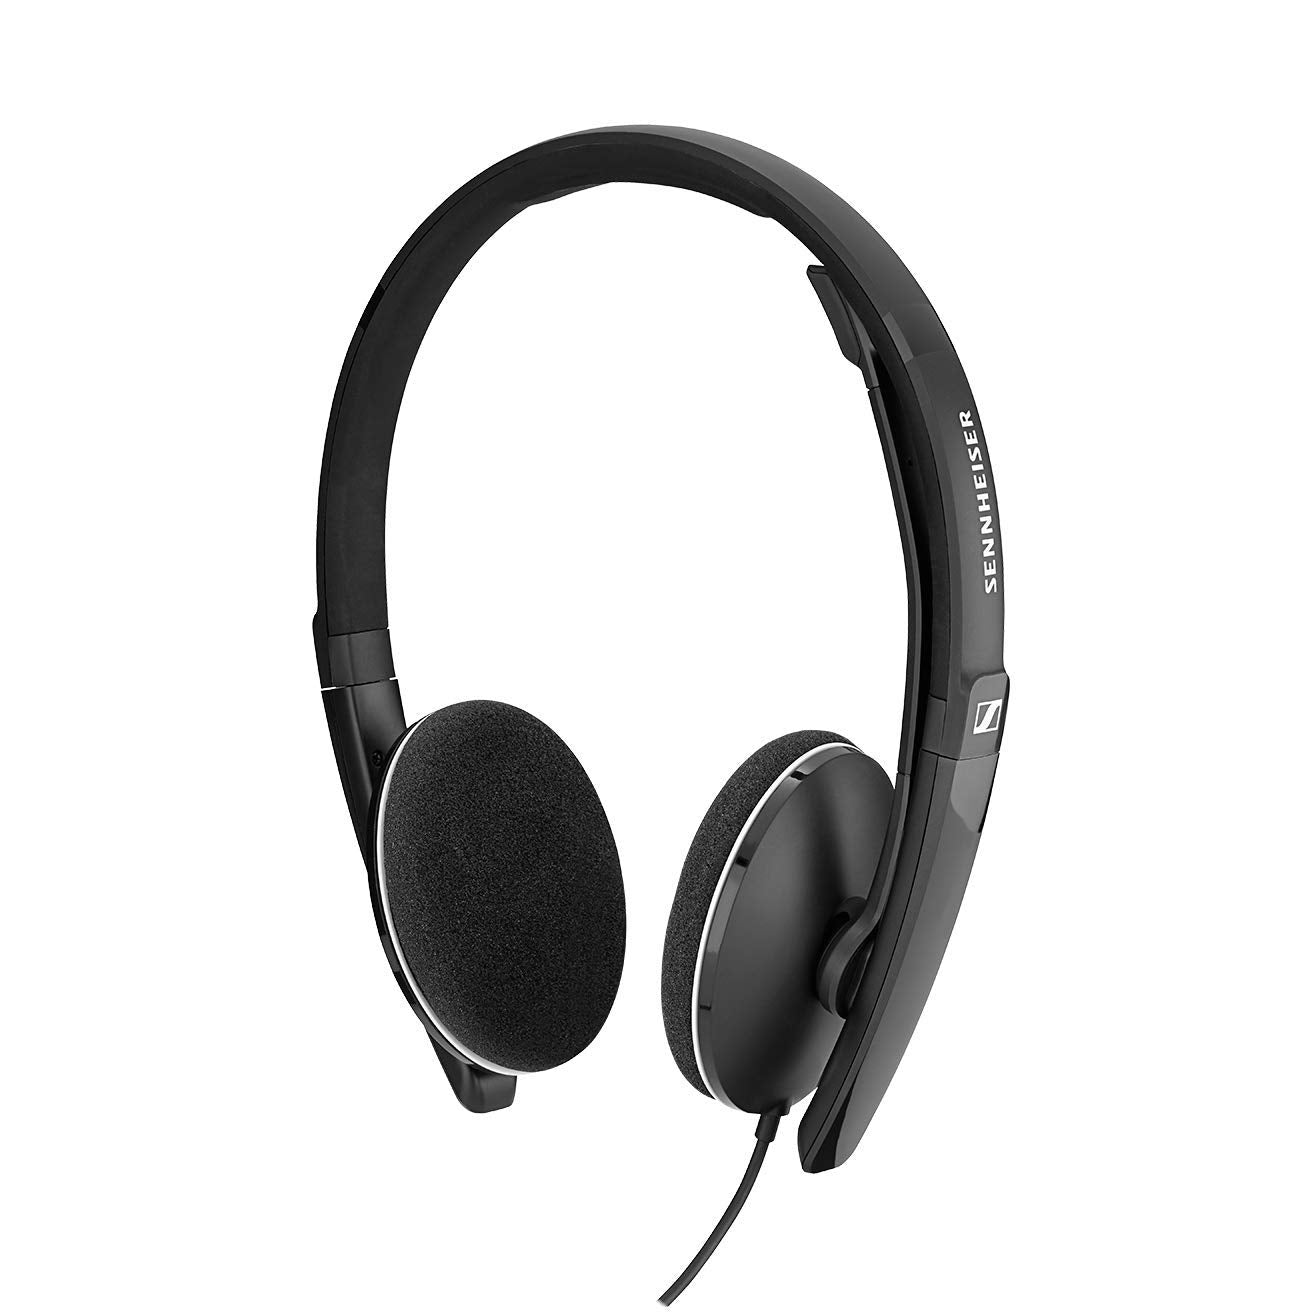 Sennheiser PC 8.2 Wired On Ear Headphones with Mic Black